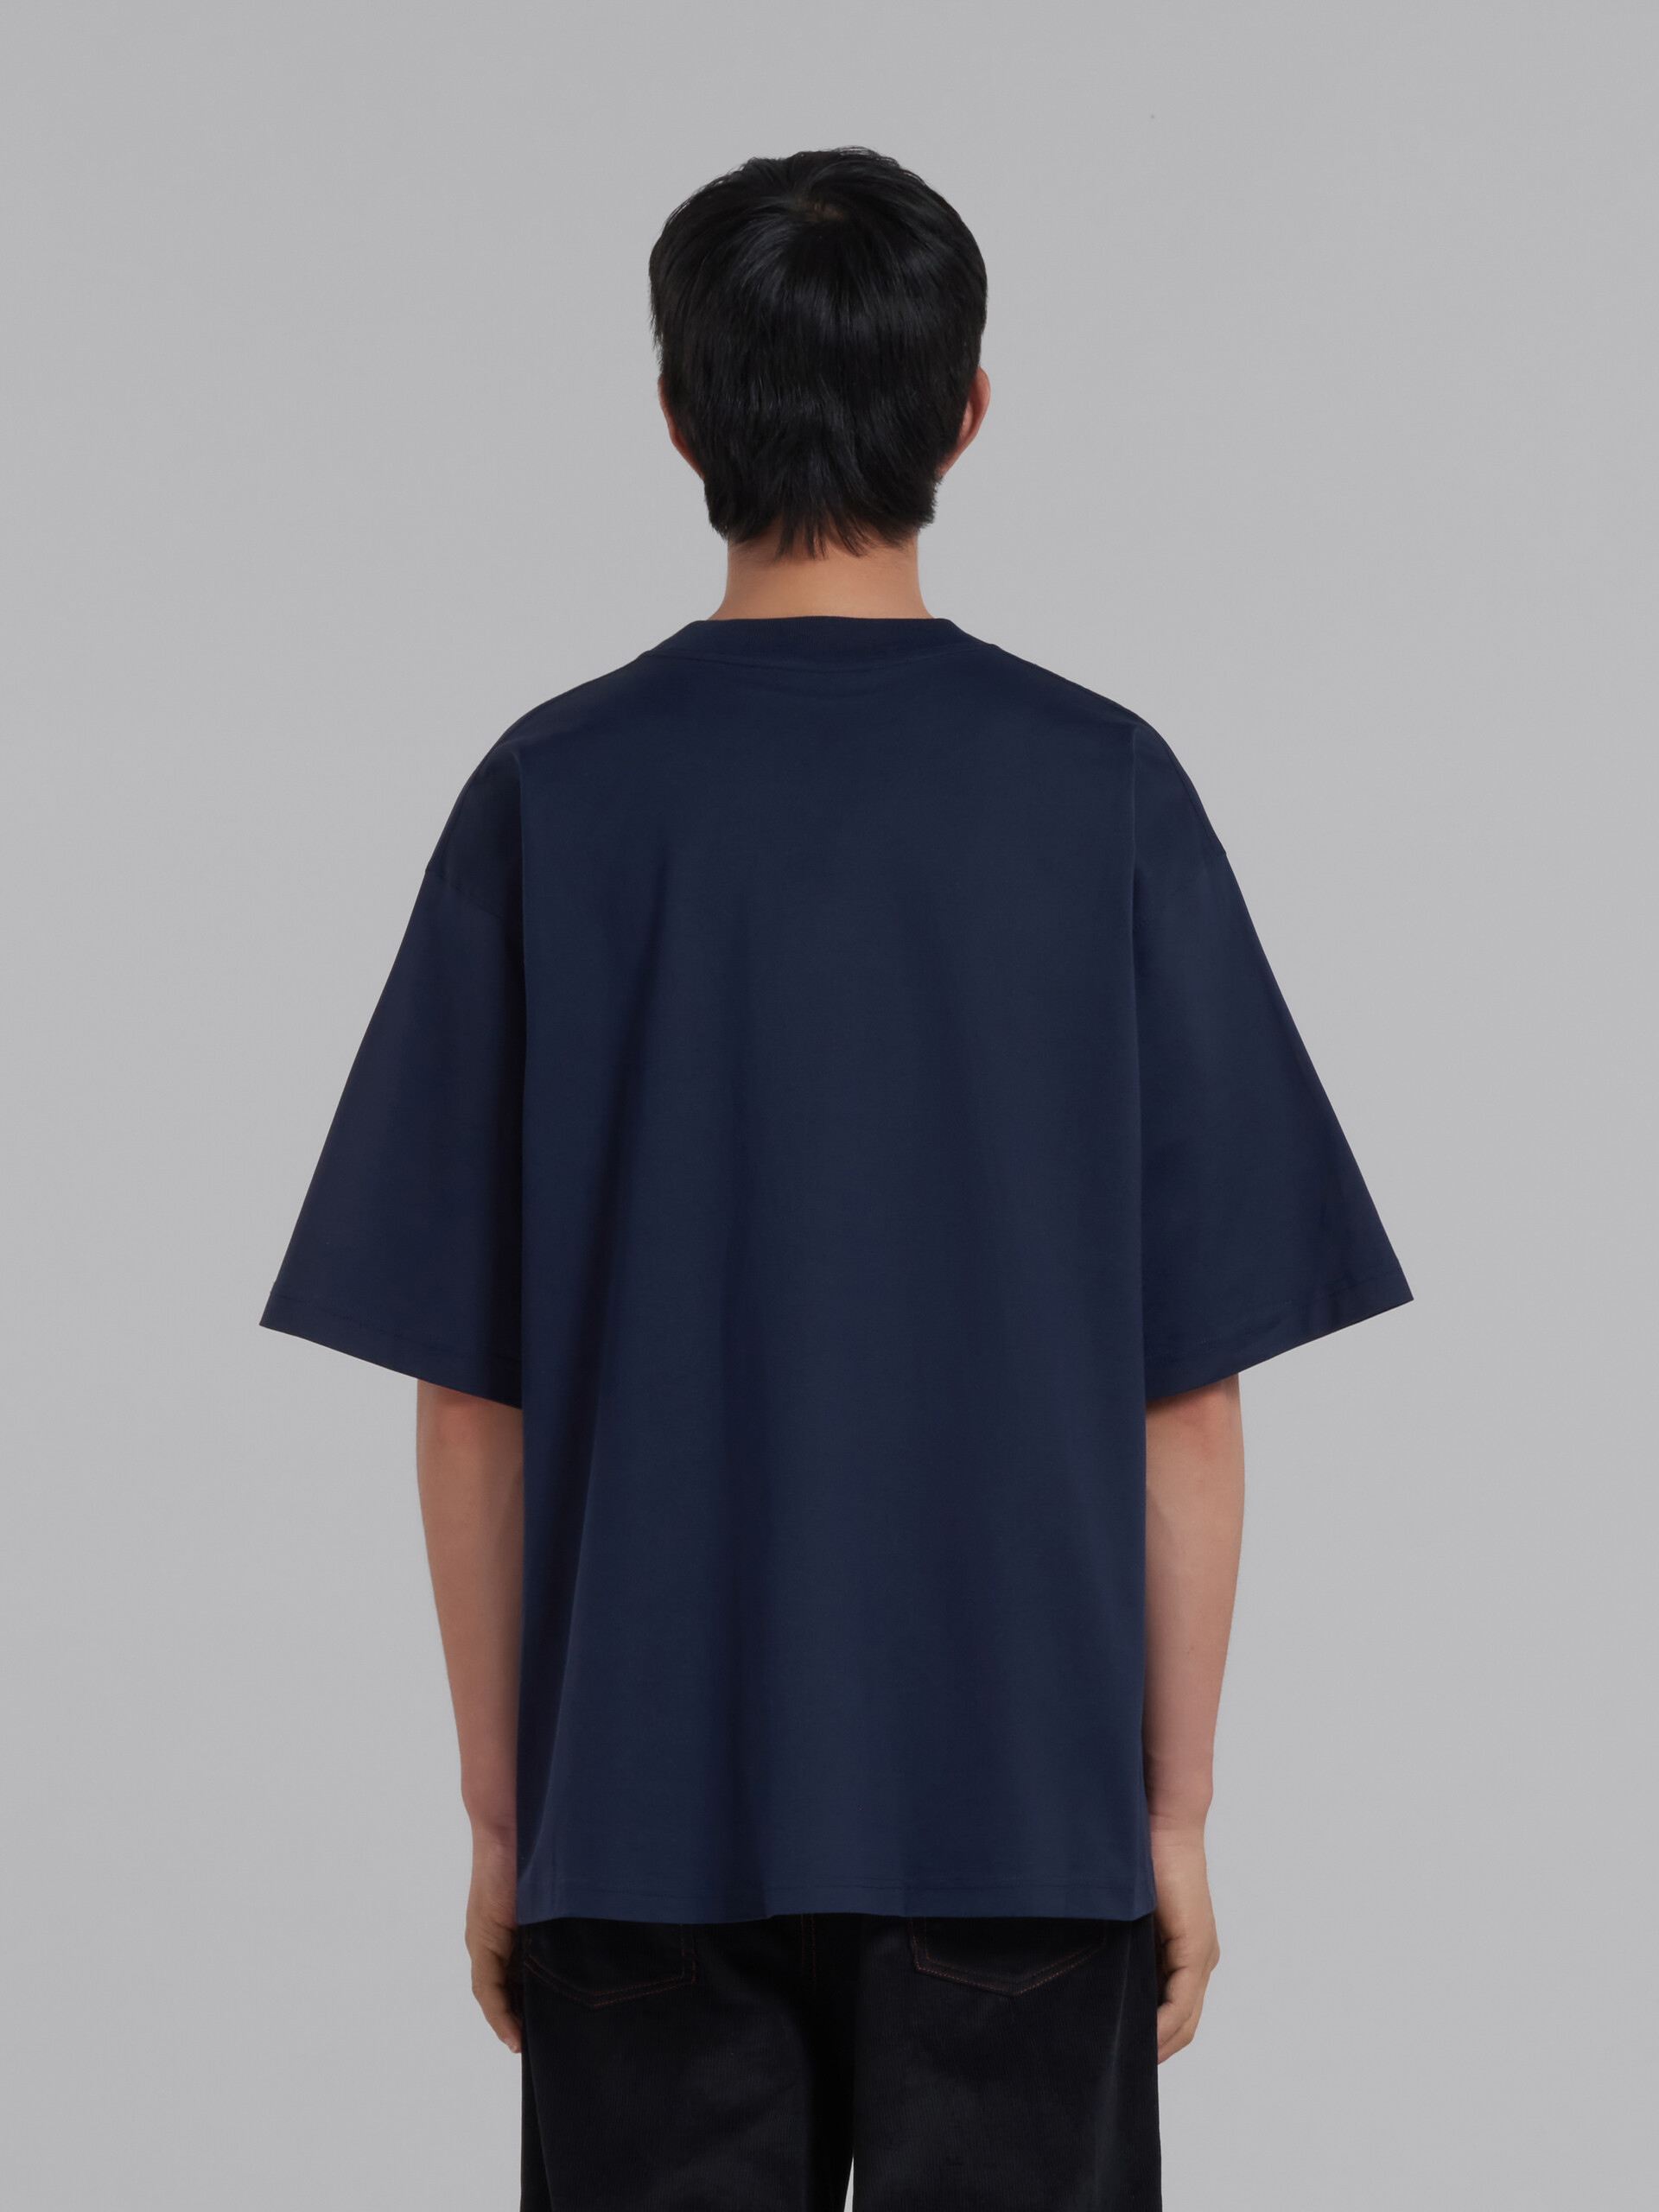 Blau-schwarzes Jersey-T-Shirt mit Logoprint - T-shirts - Image 3